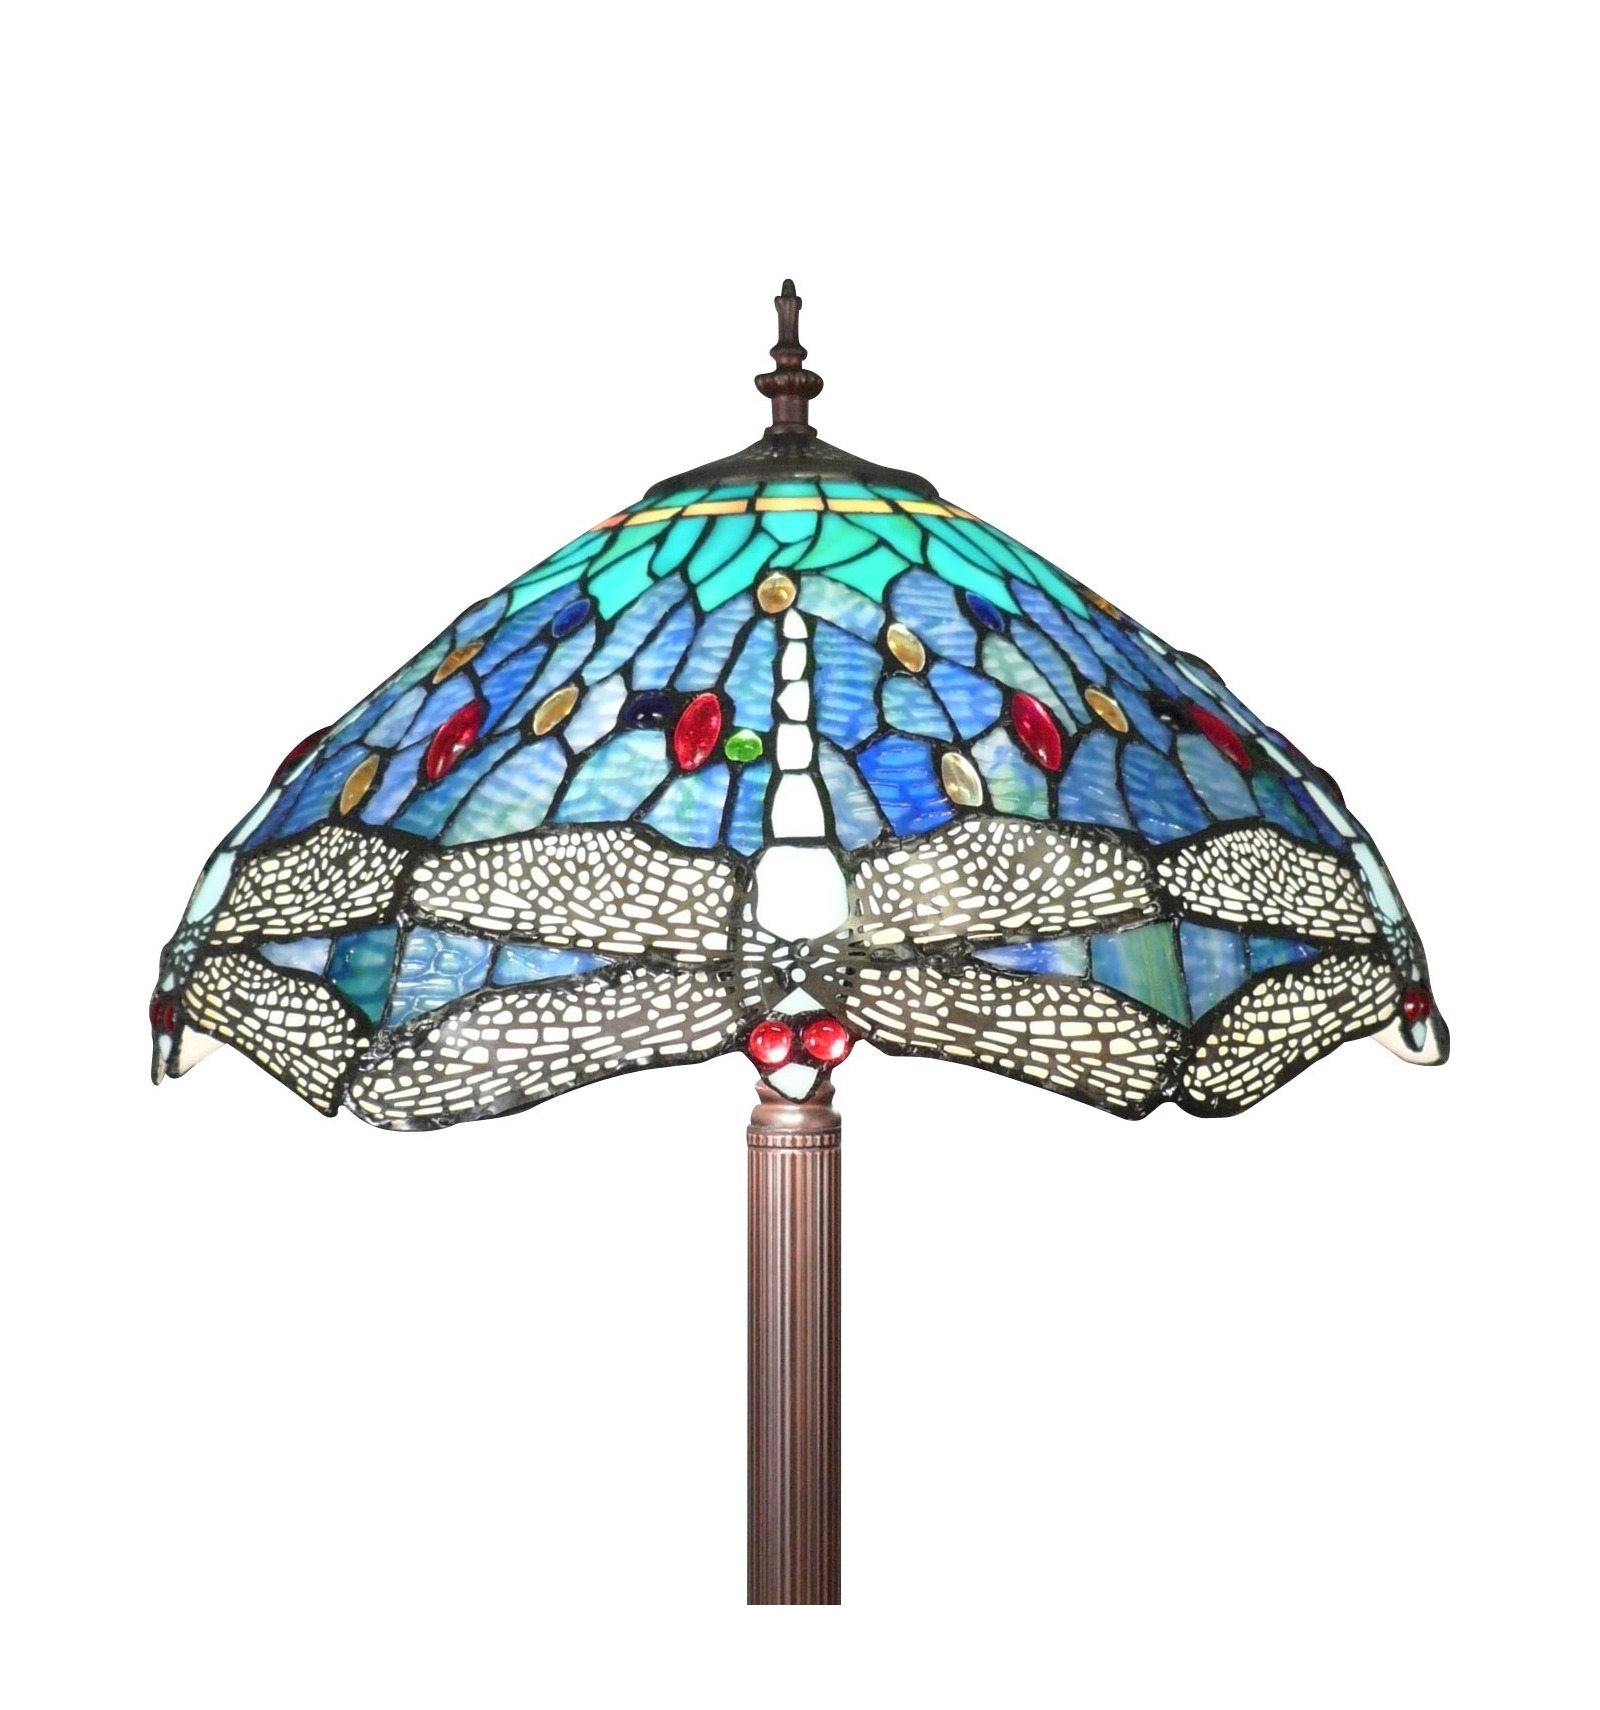 Overtreden robot tyfoon Tiffany Vloerlamp met libelle decor - Tiffany lampen